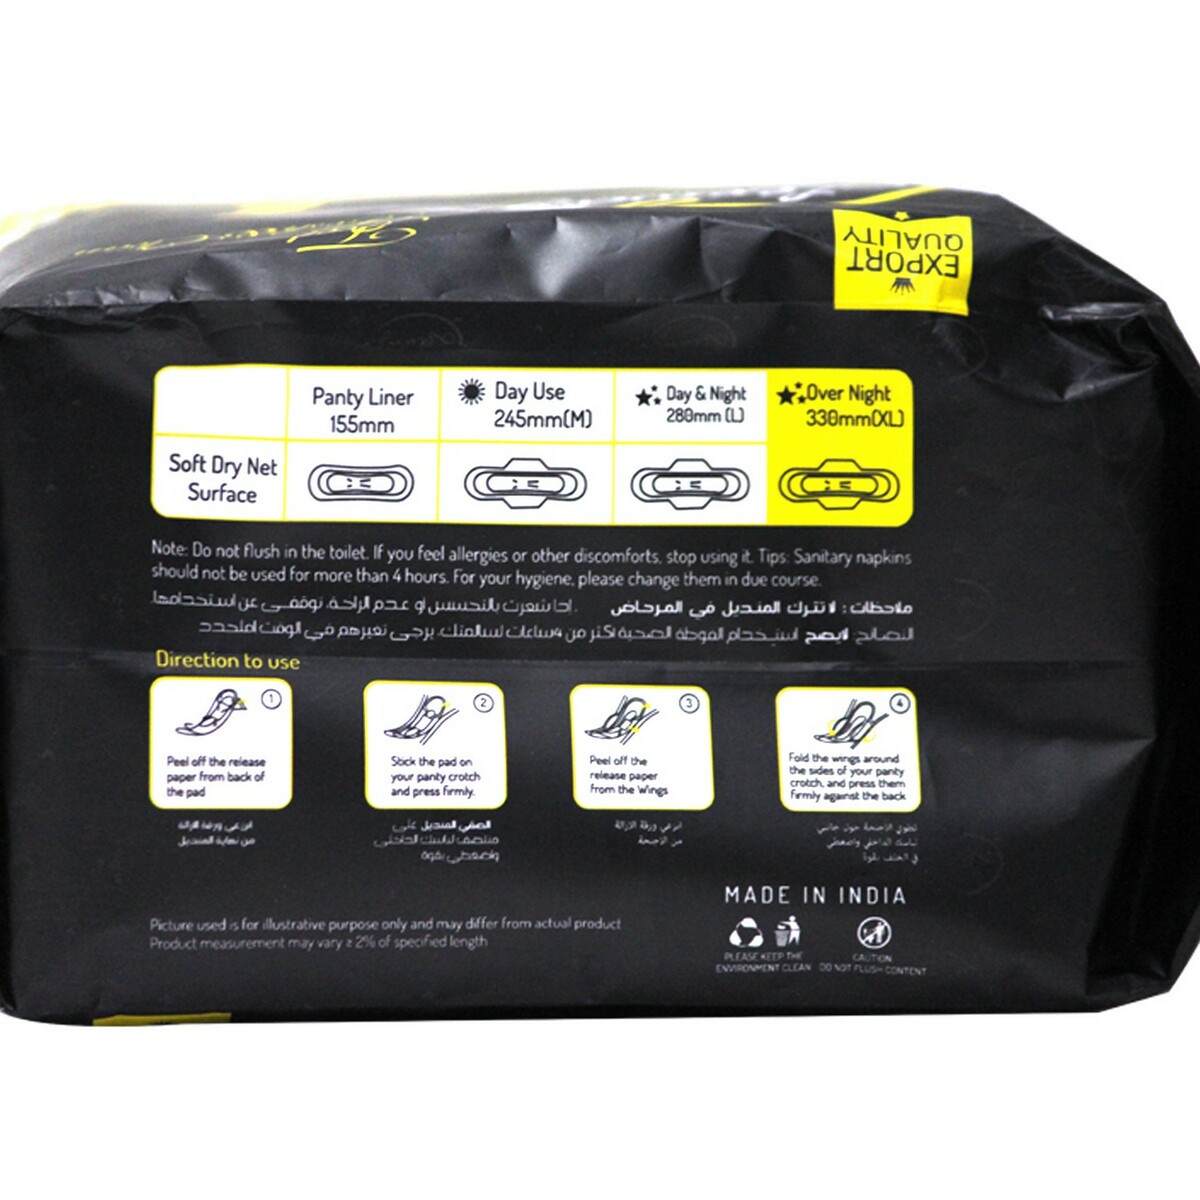 Leeway Comforts Regular Sanitary Napkins XL 2x 24's